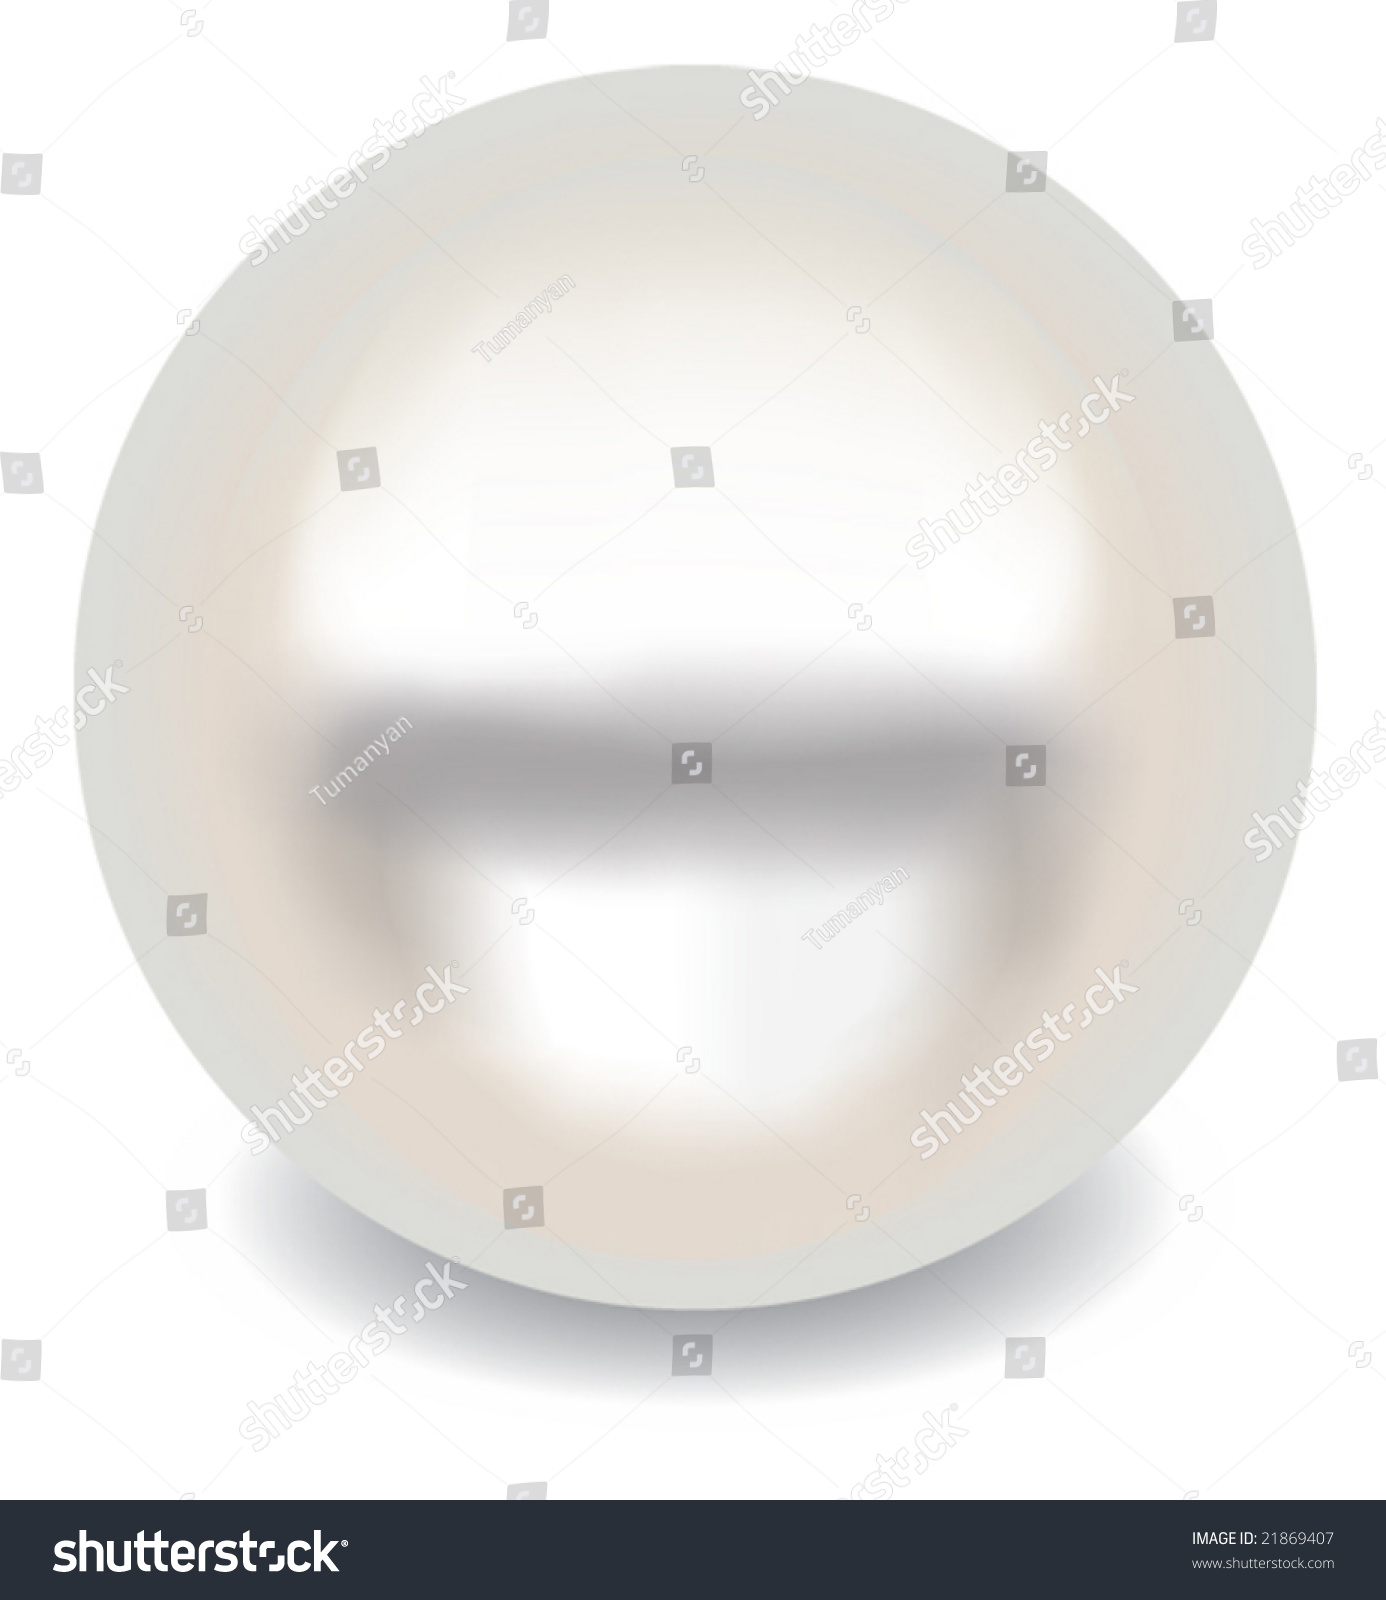 Realistic Vector Pearl. - 21869407 : Shutterstock